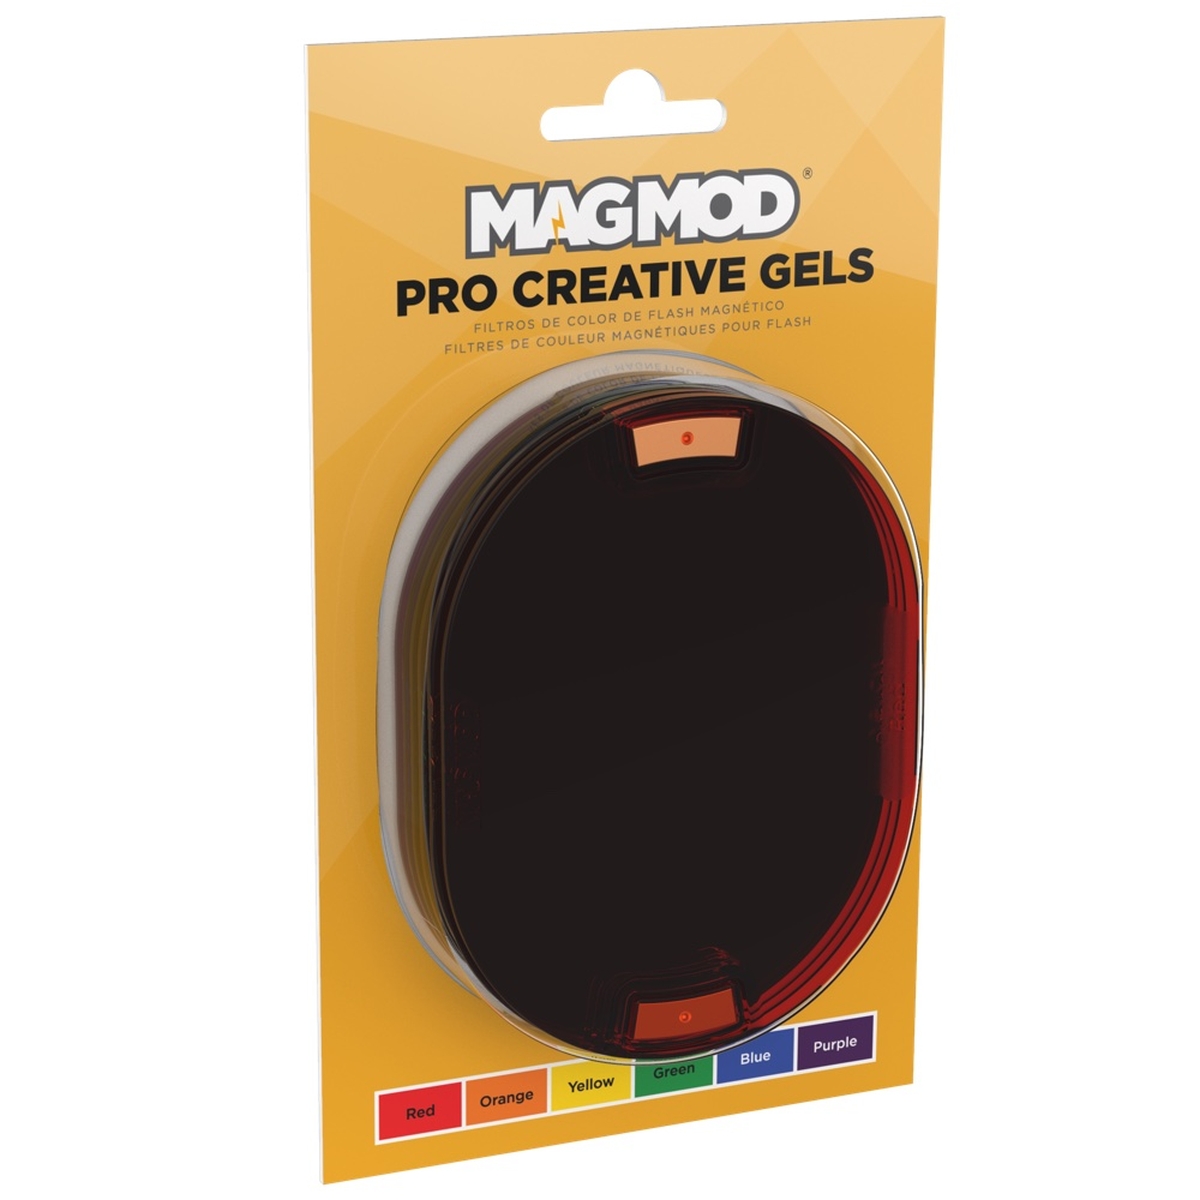 MagMod Pro Creative Gels